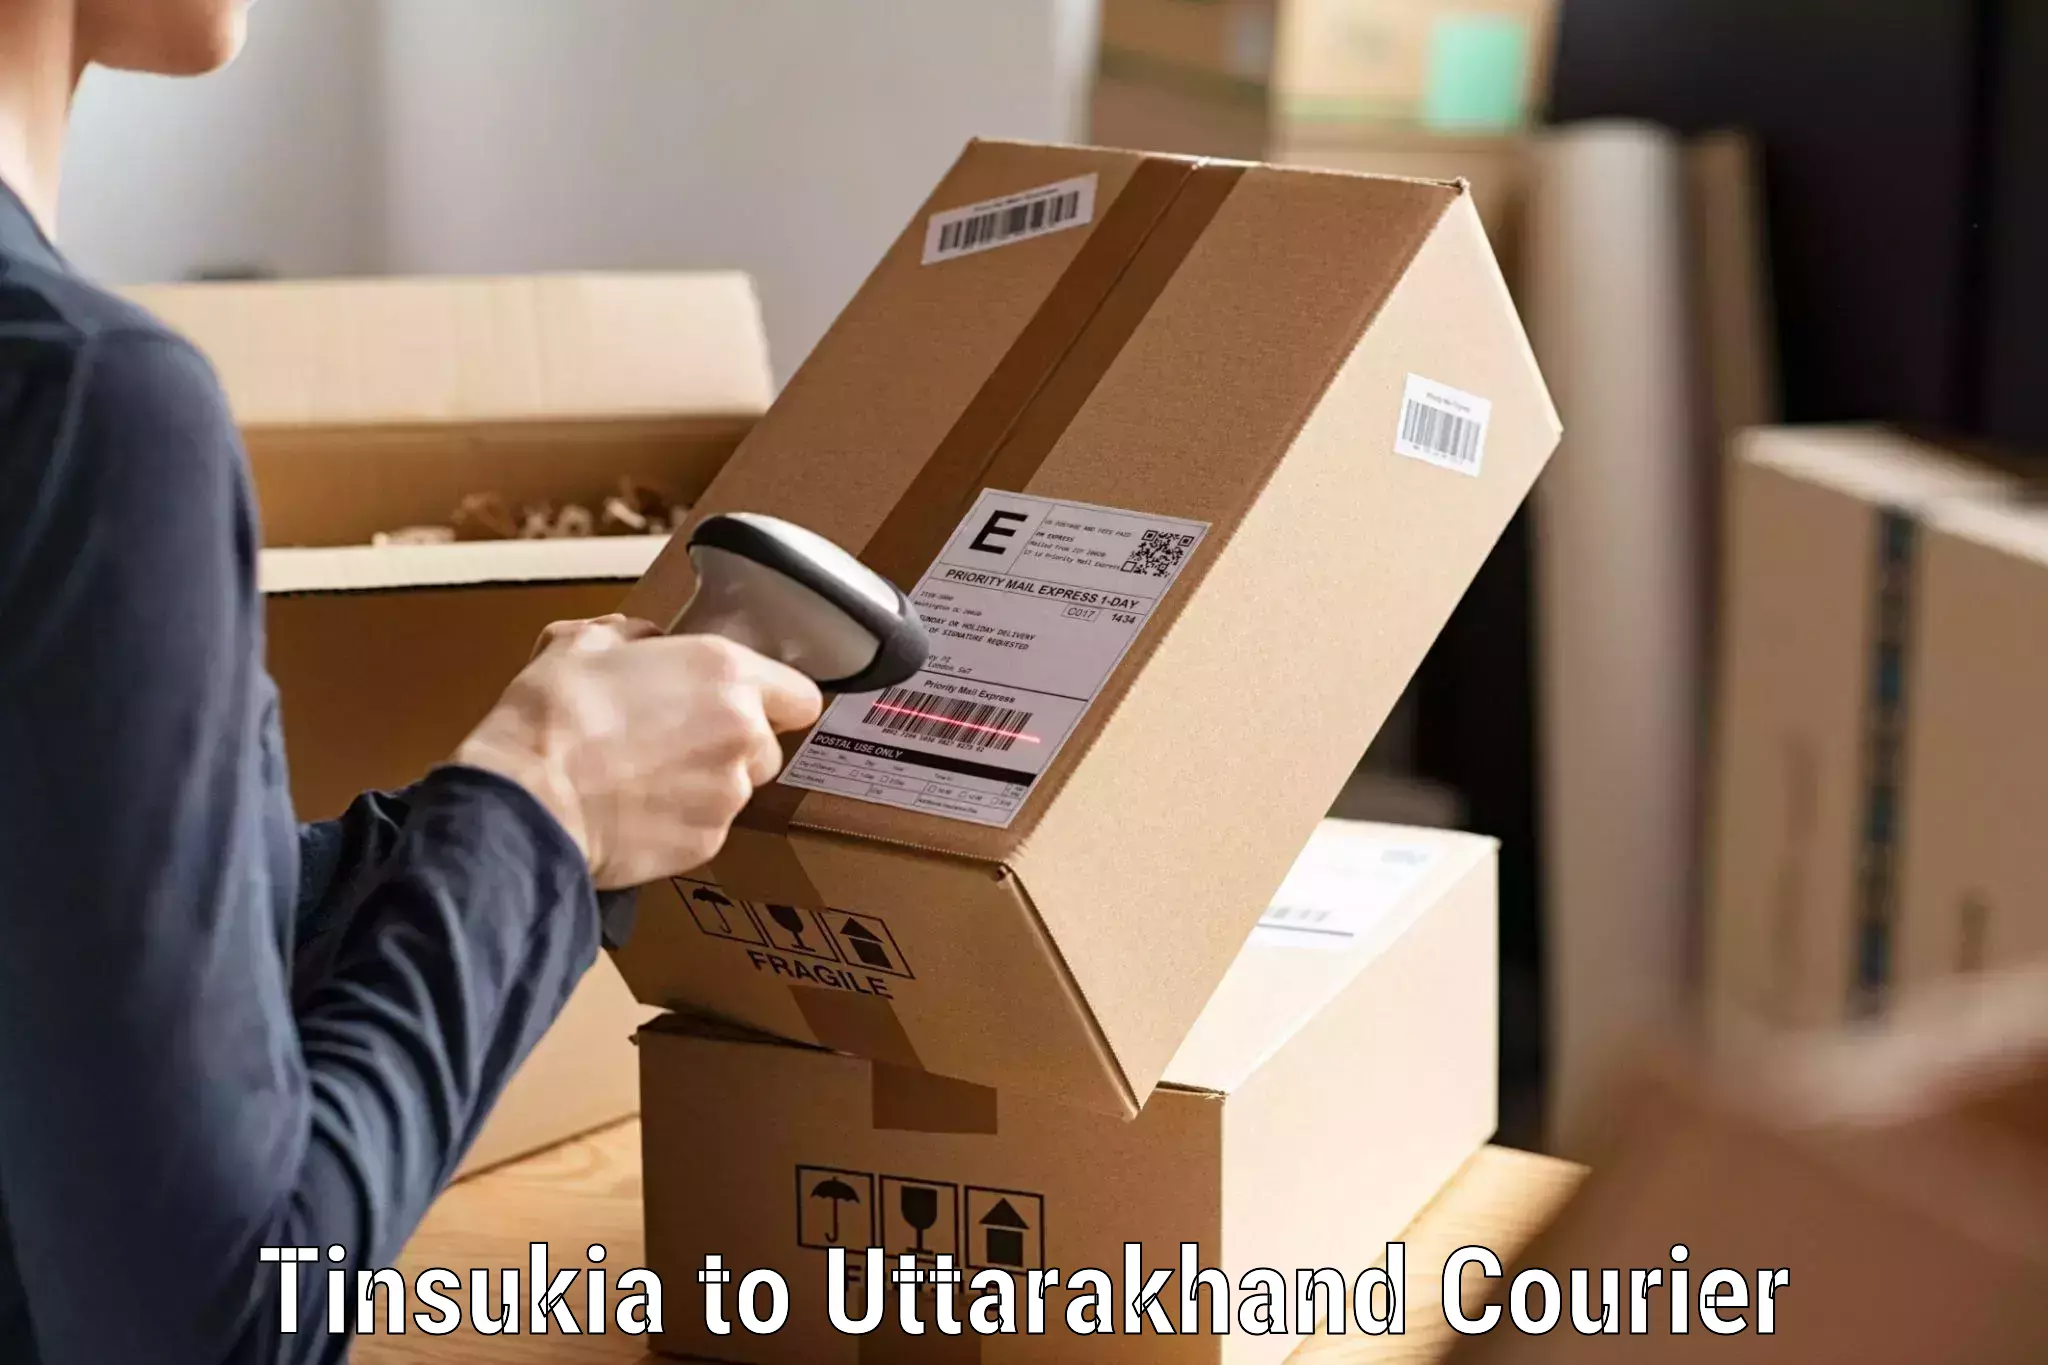 Business delivery service Tinsukia to Uttarakhand